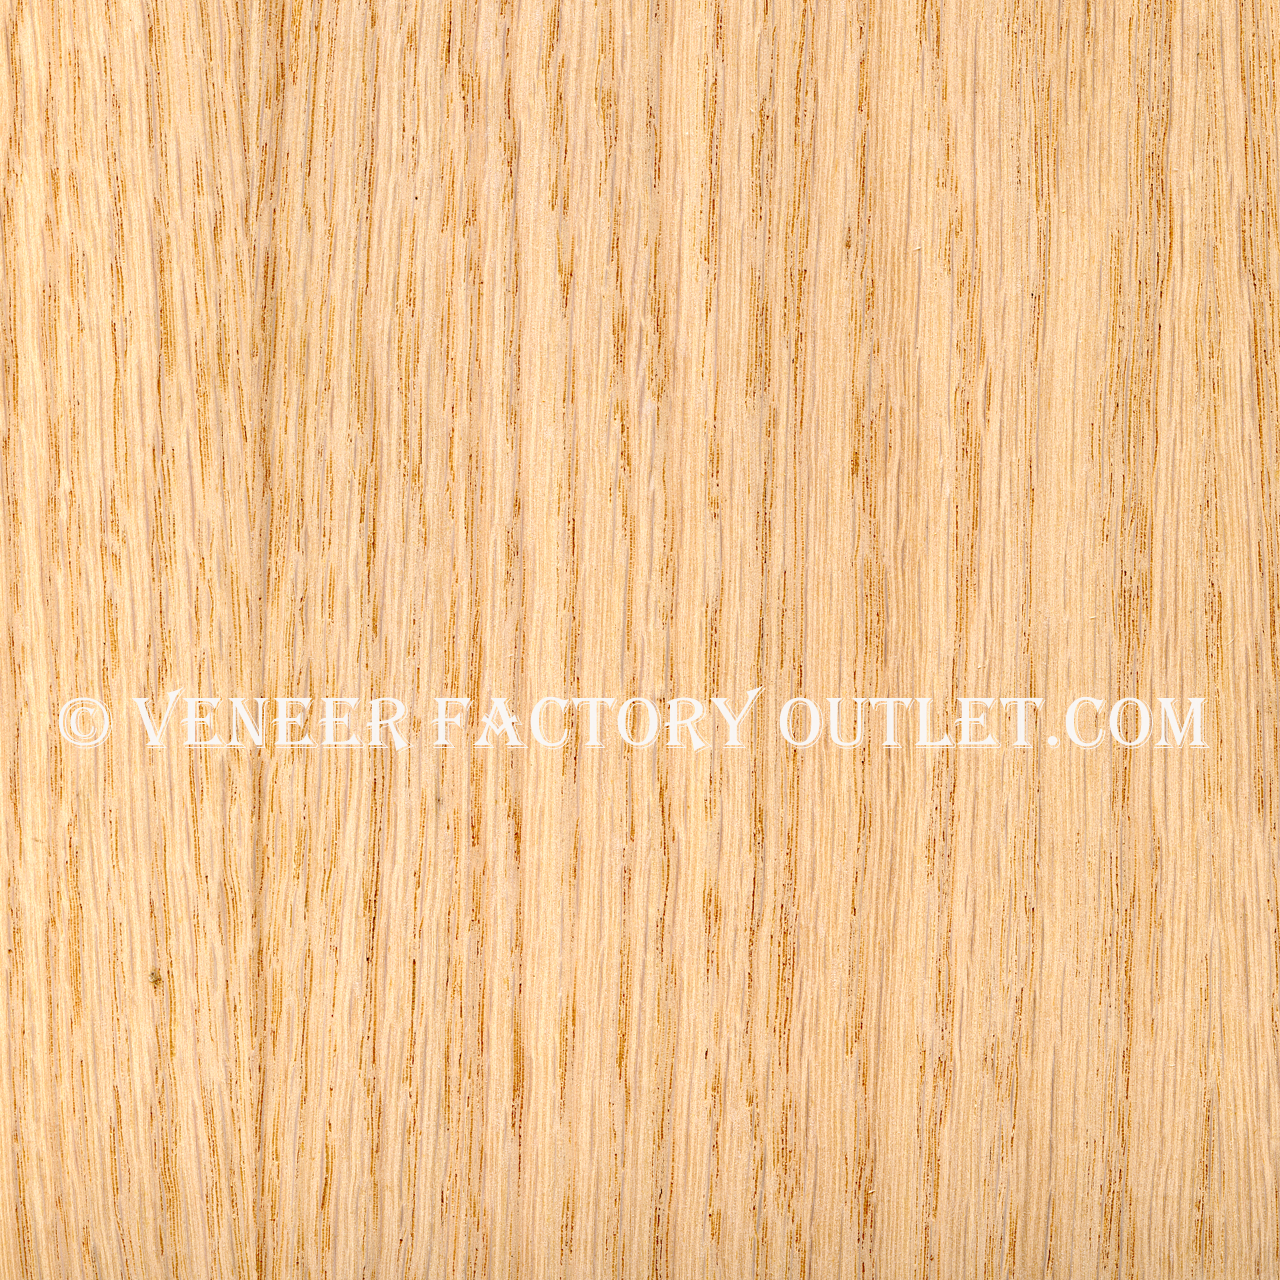 Oak Veneer Sheets Cutoffs $9 Ppd. Oak Veneer Factory Outlet.com